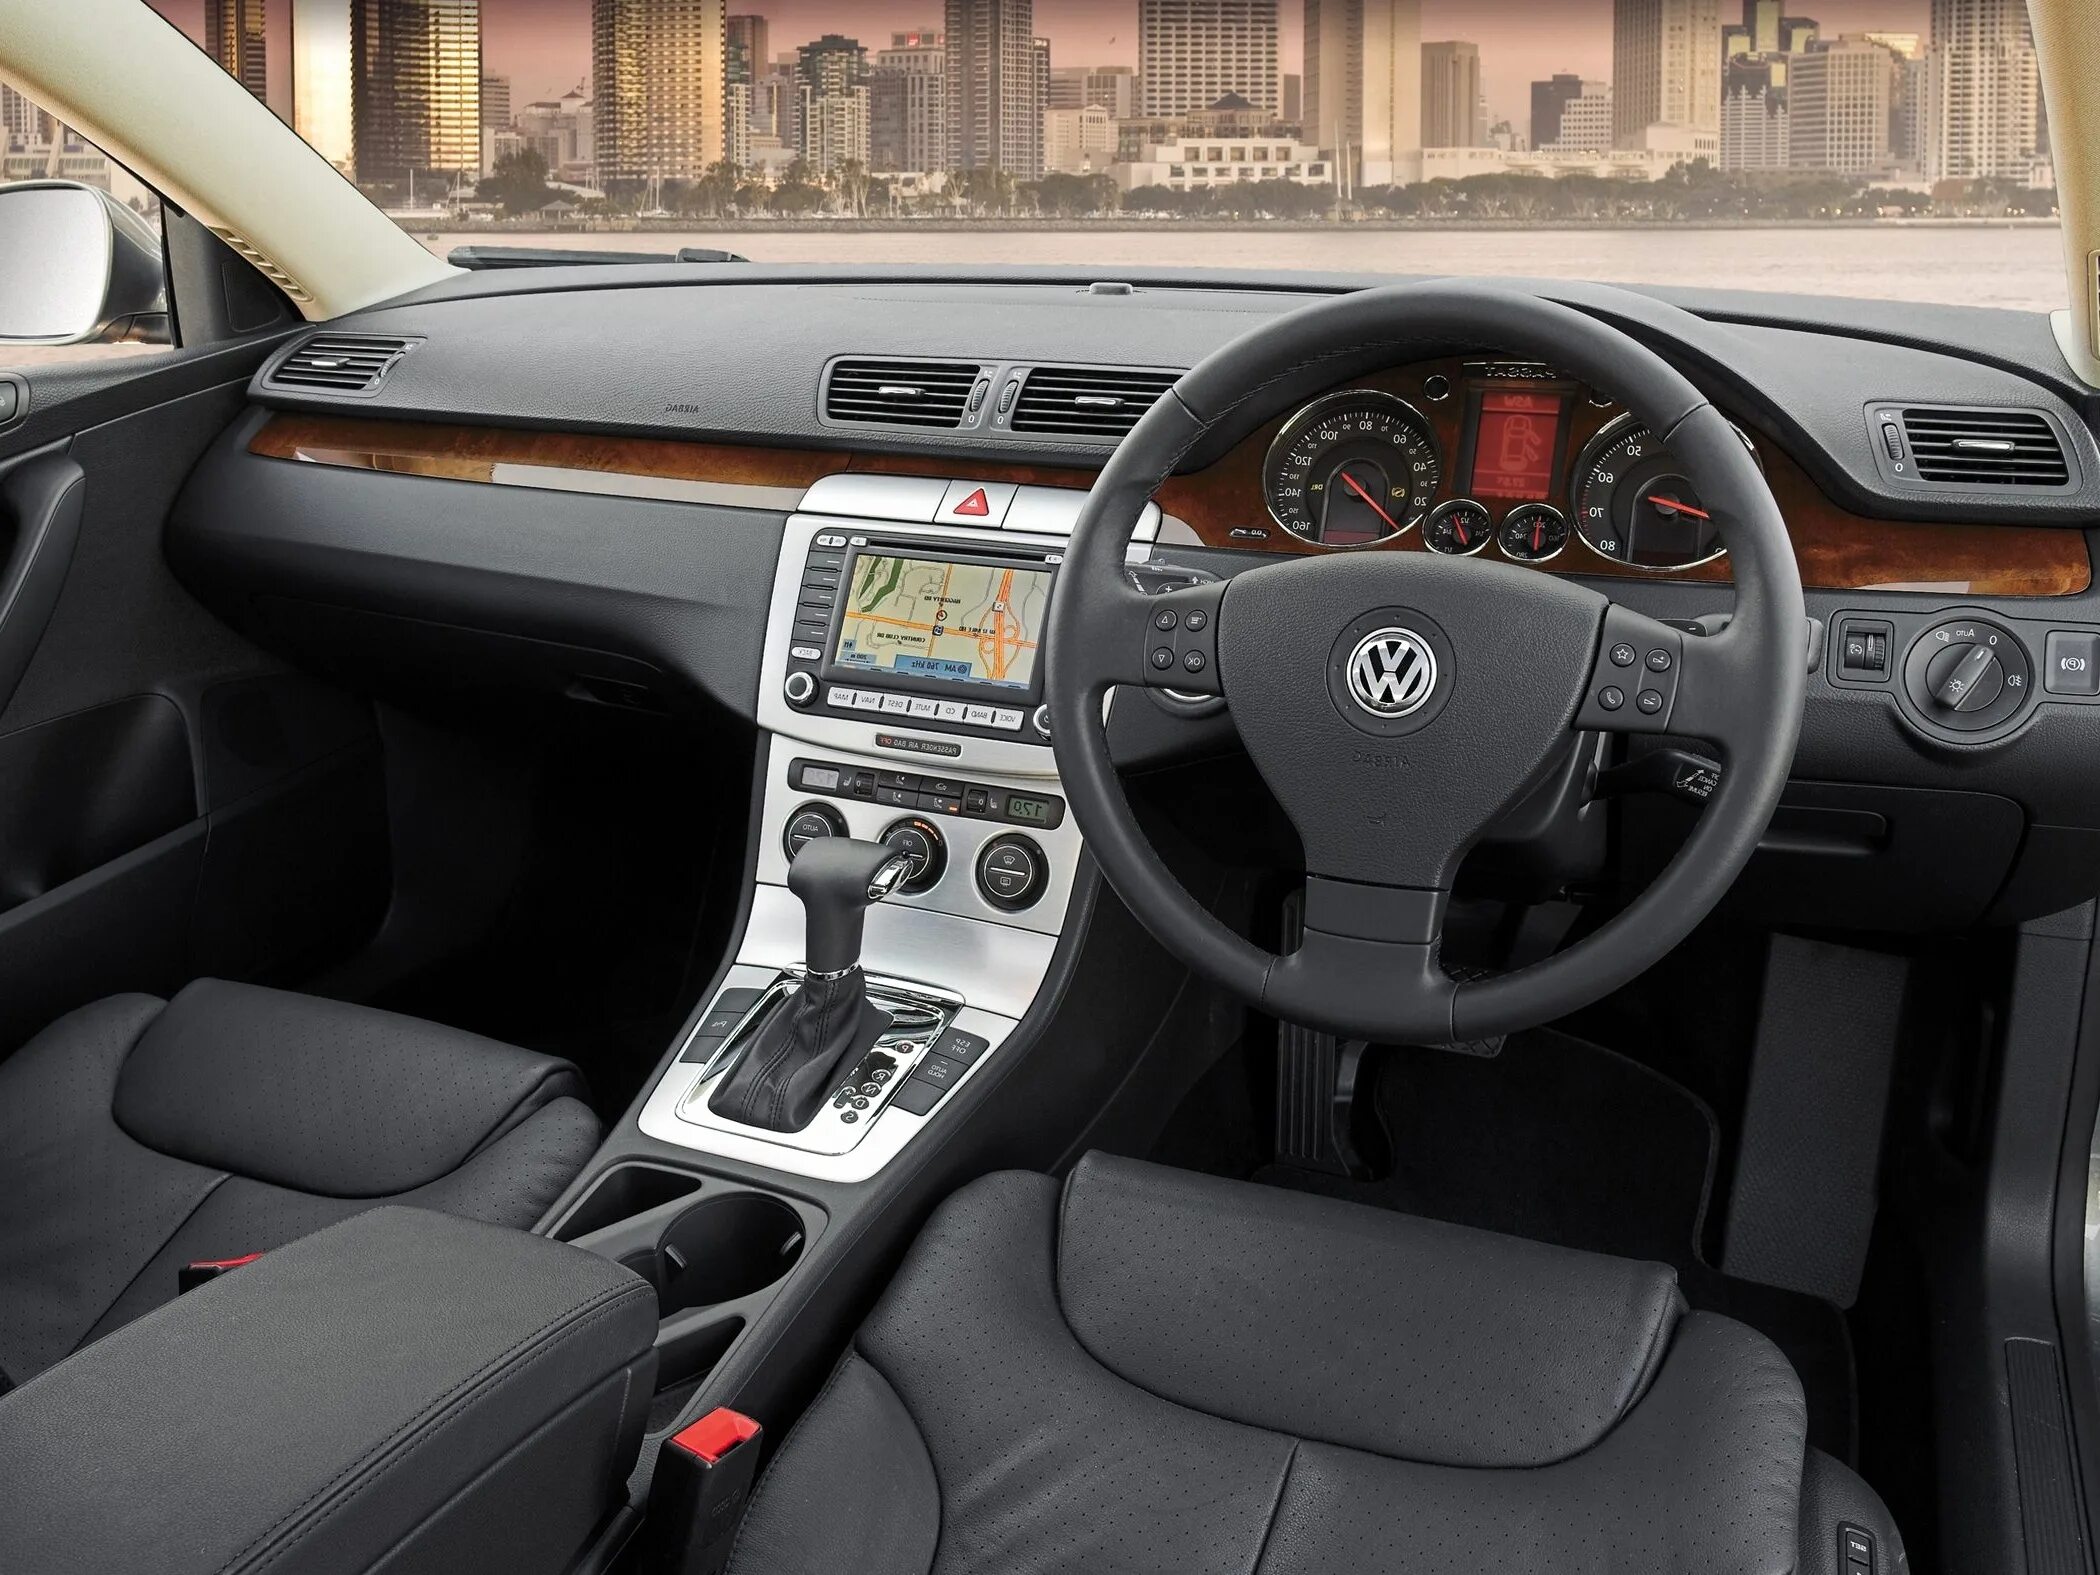 Включи б6. VW Passat b6 салон. Волцваген пассатb6 салон. Volkswagen Passat b6 Interior. Фольксваген Пассат б6 седан салон.